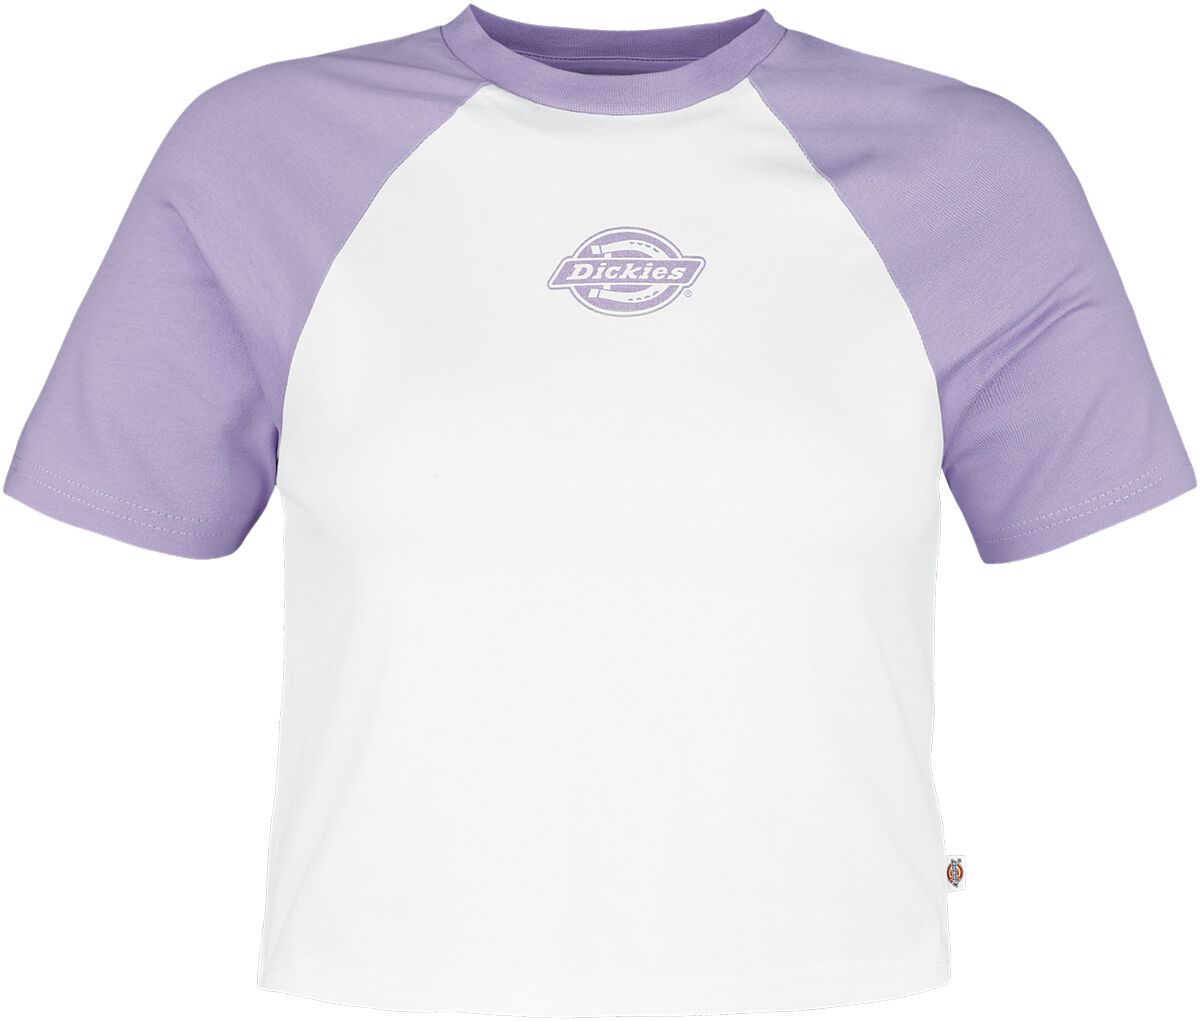 Dickies Sodaville Tee T-Shirt lila weiß in XS